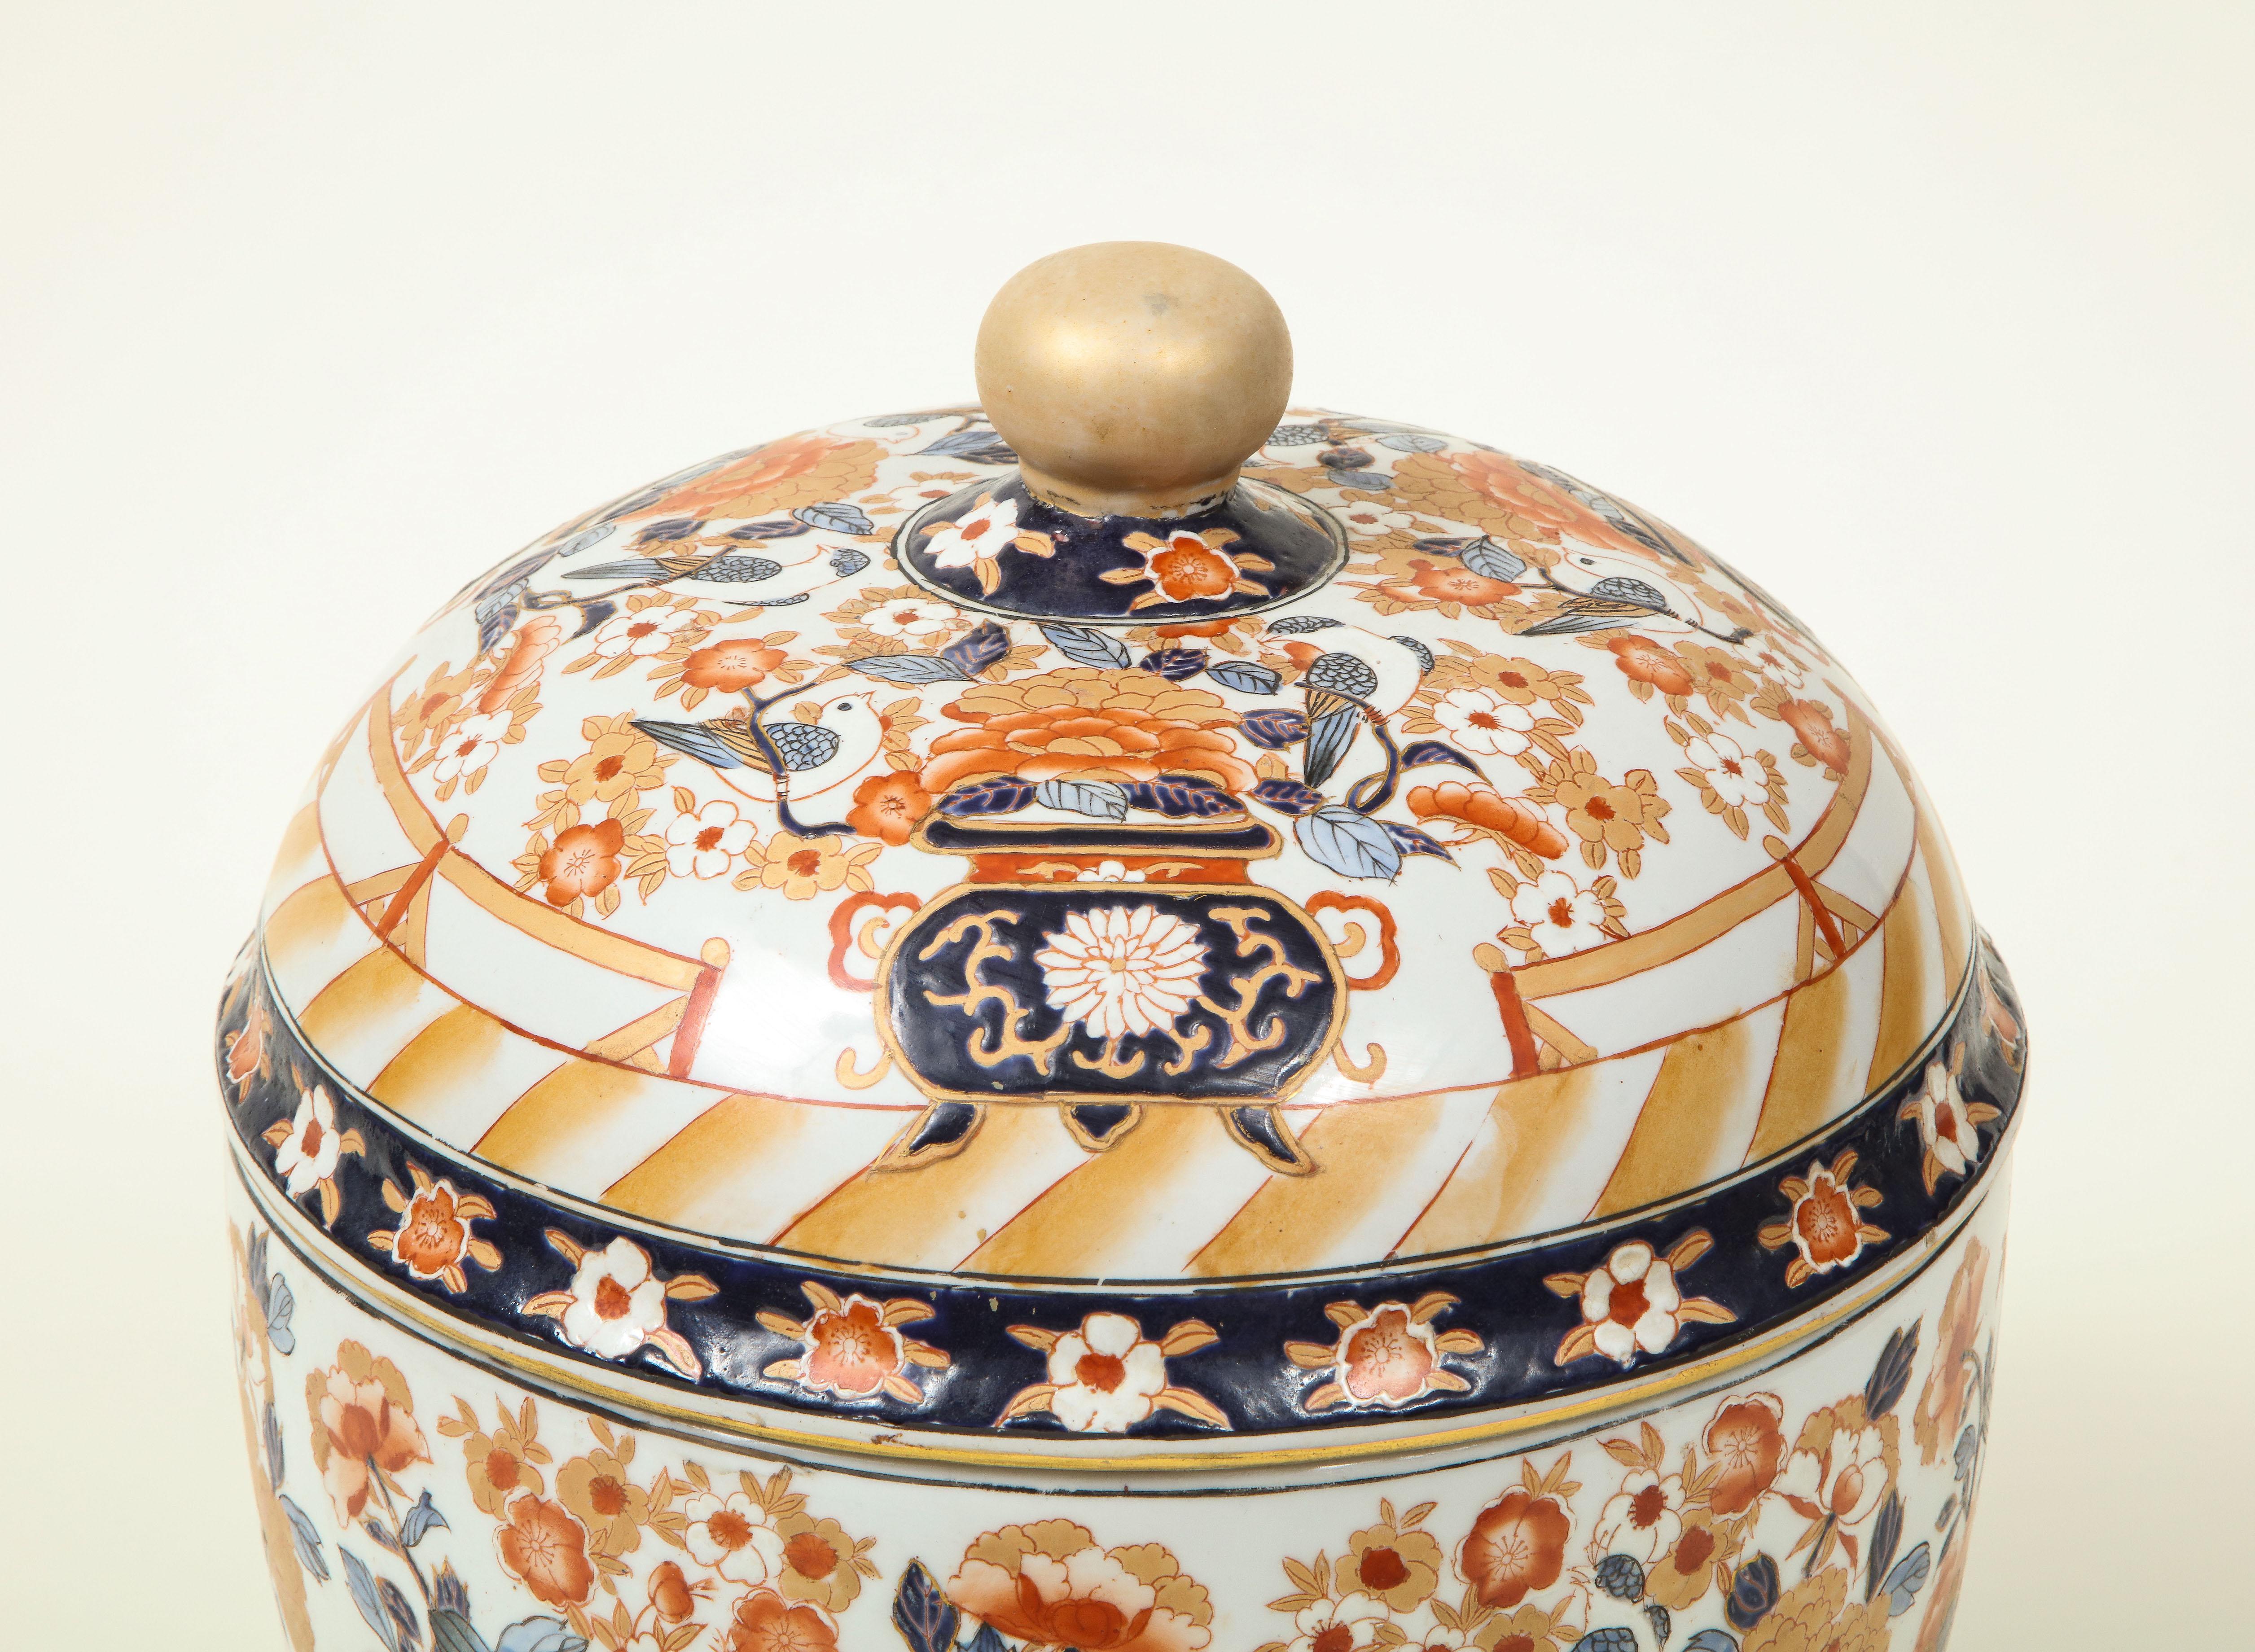 20th Century Chinese Export Porcelain Imari Covered Tureen